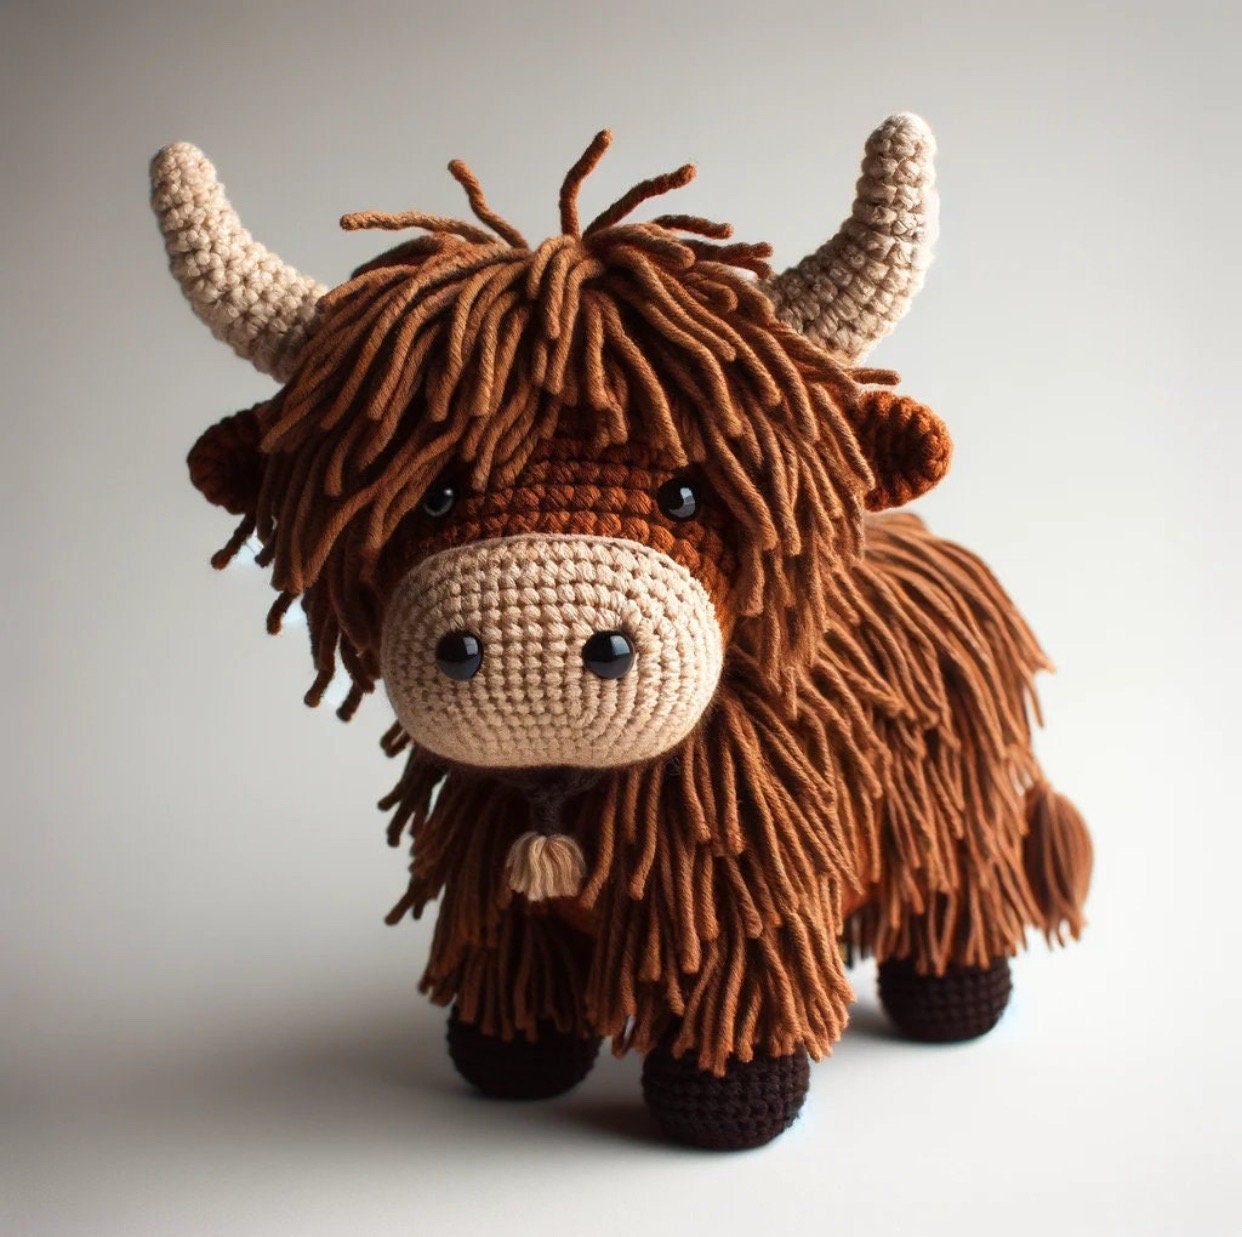 Crochet Along: Full Video Tutorial For Hilde The Highland Cow